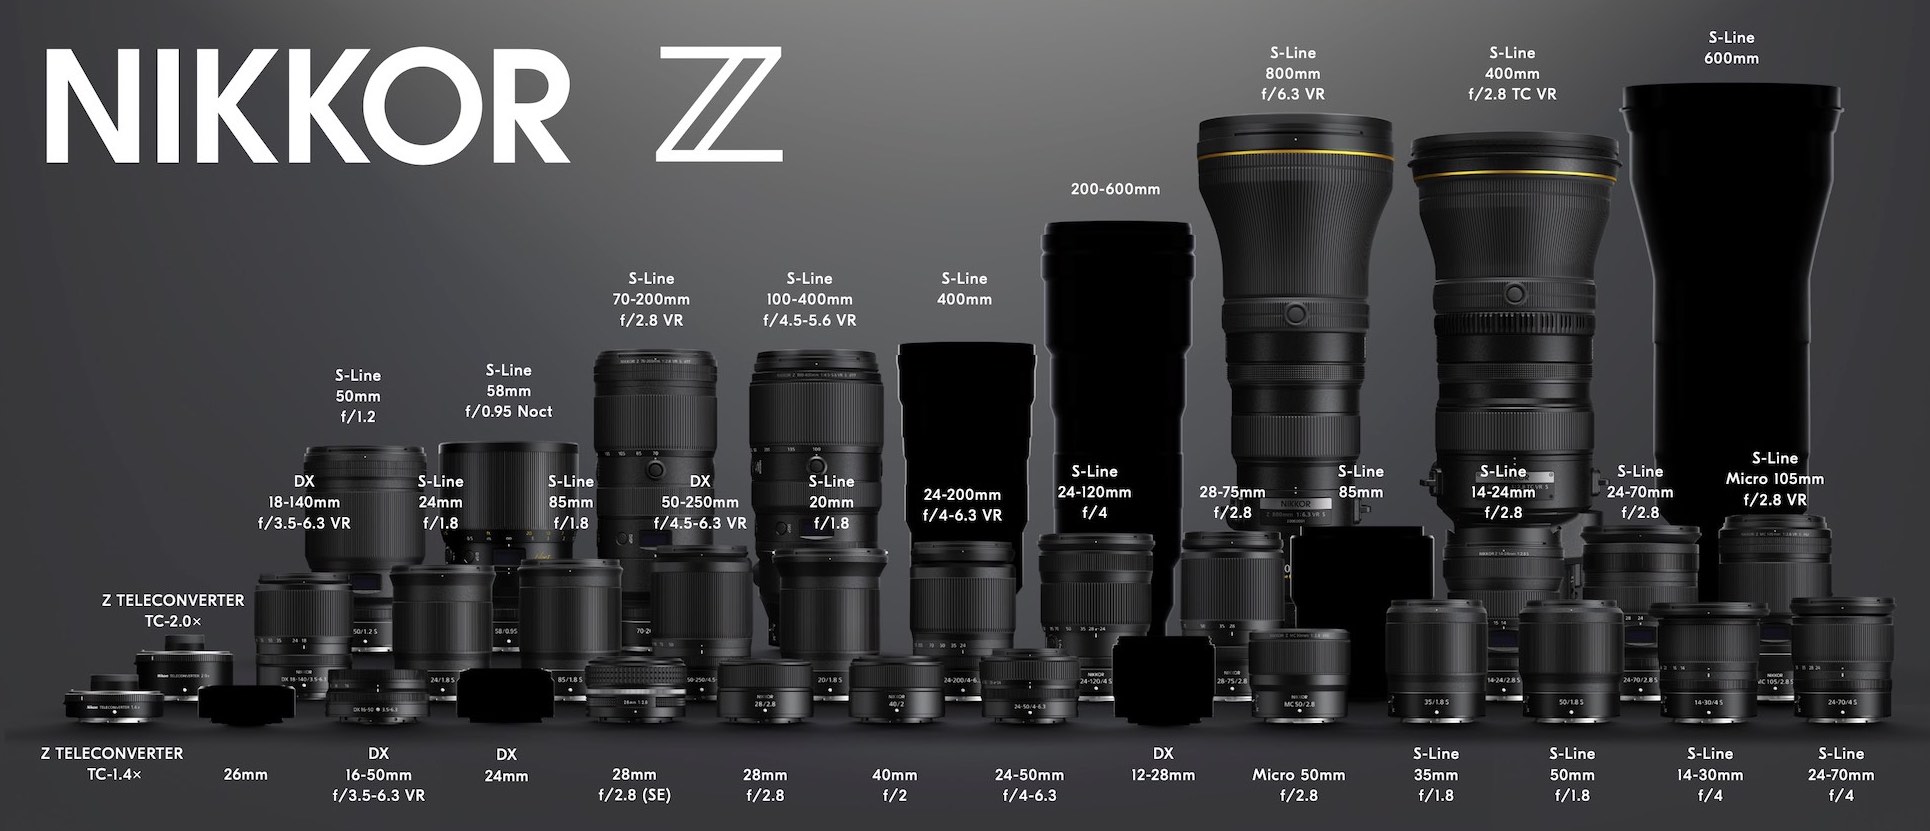 Additive create None Nikon NIKKOR Z 600mm f/4 lens rumors - Nikon Rumors